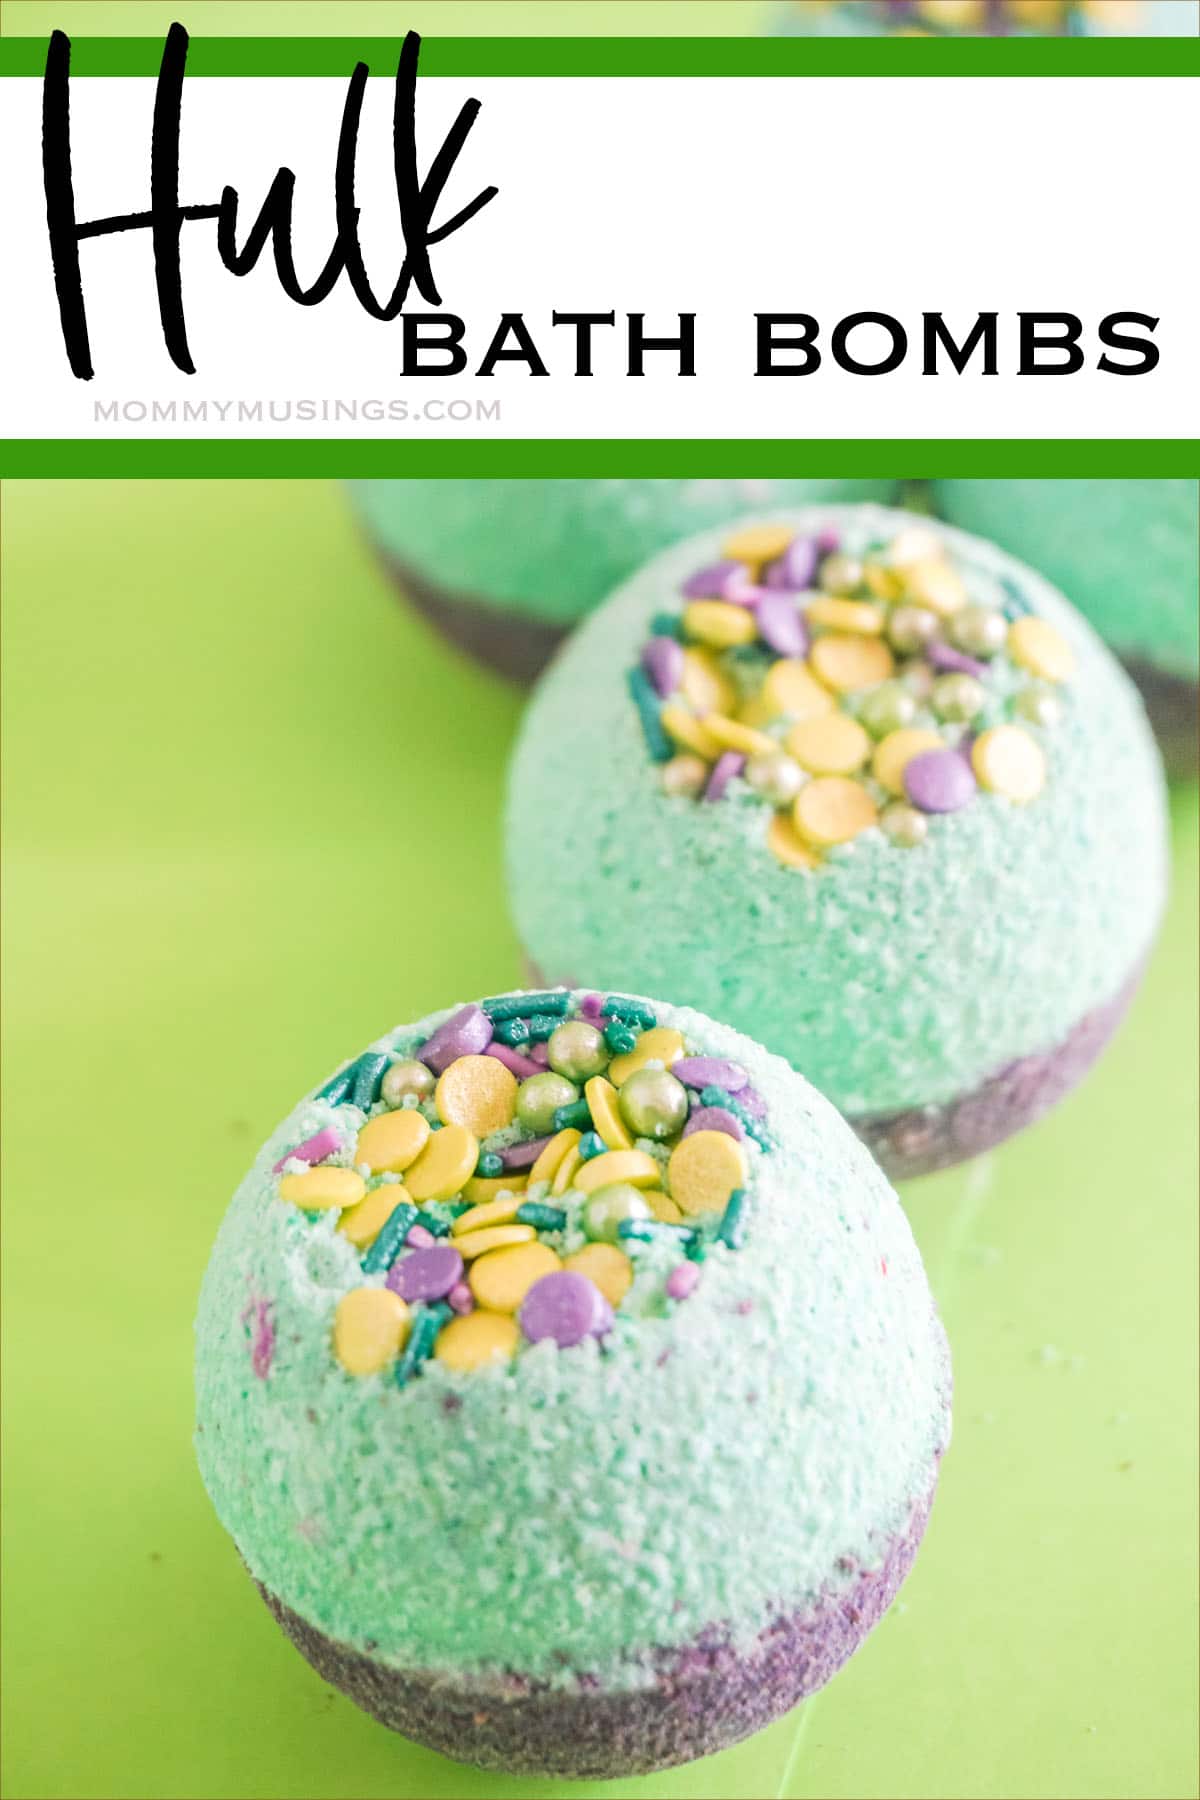 superhero bath bomb recipe with text which reads hulk bath bombs